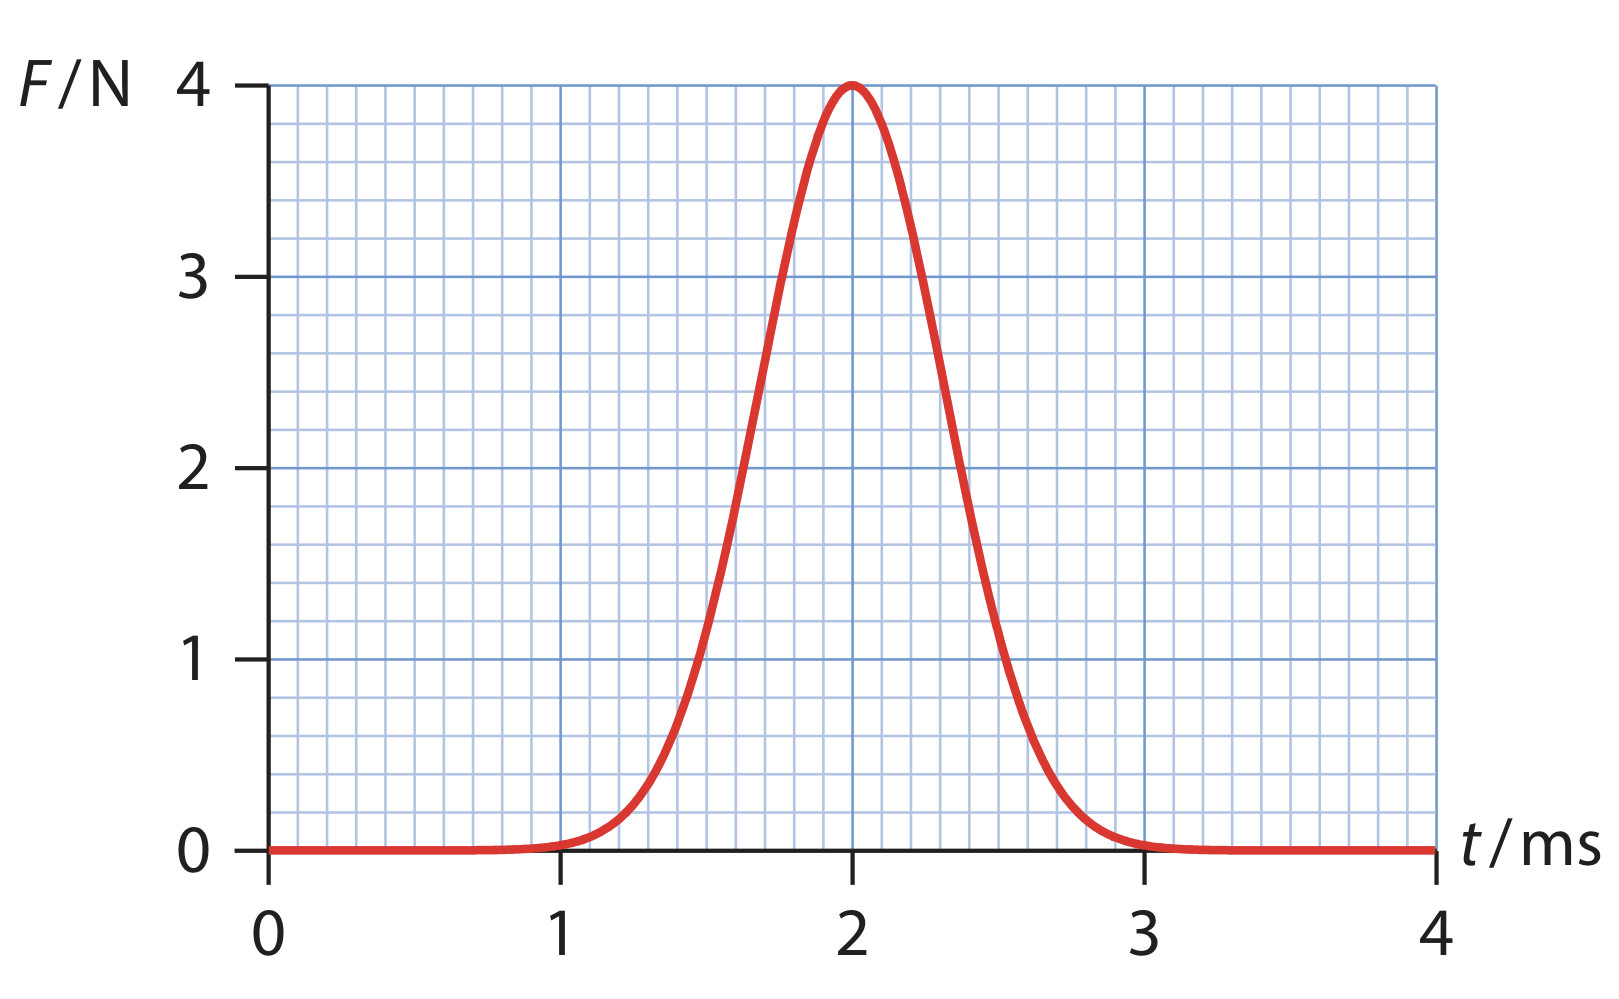 force-time_graph.jpeg